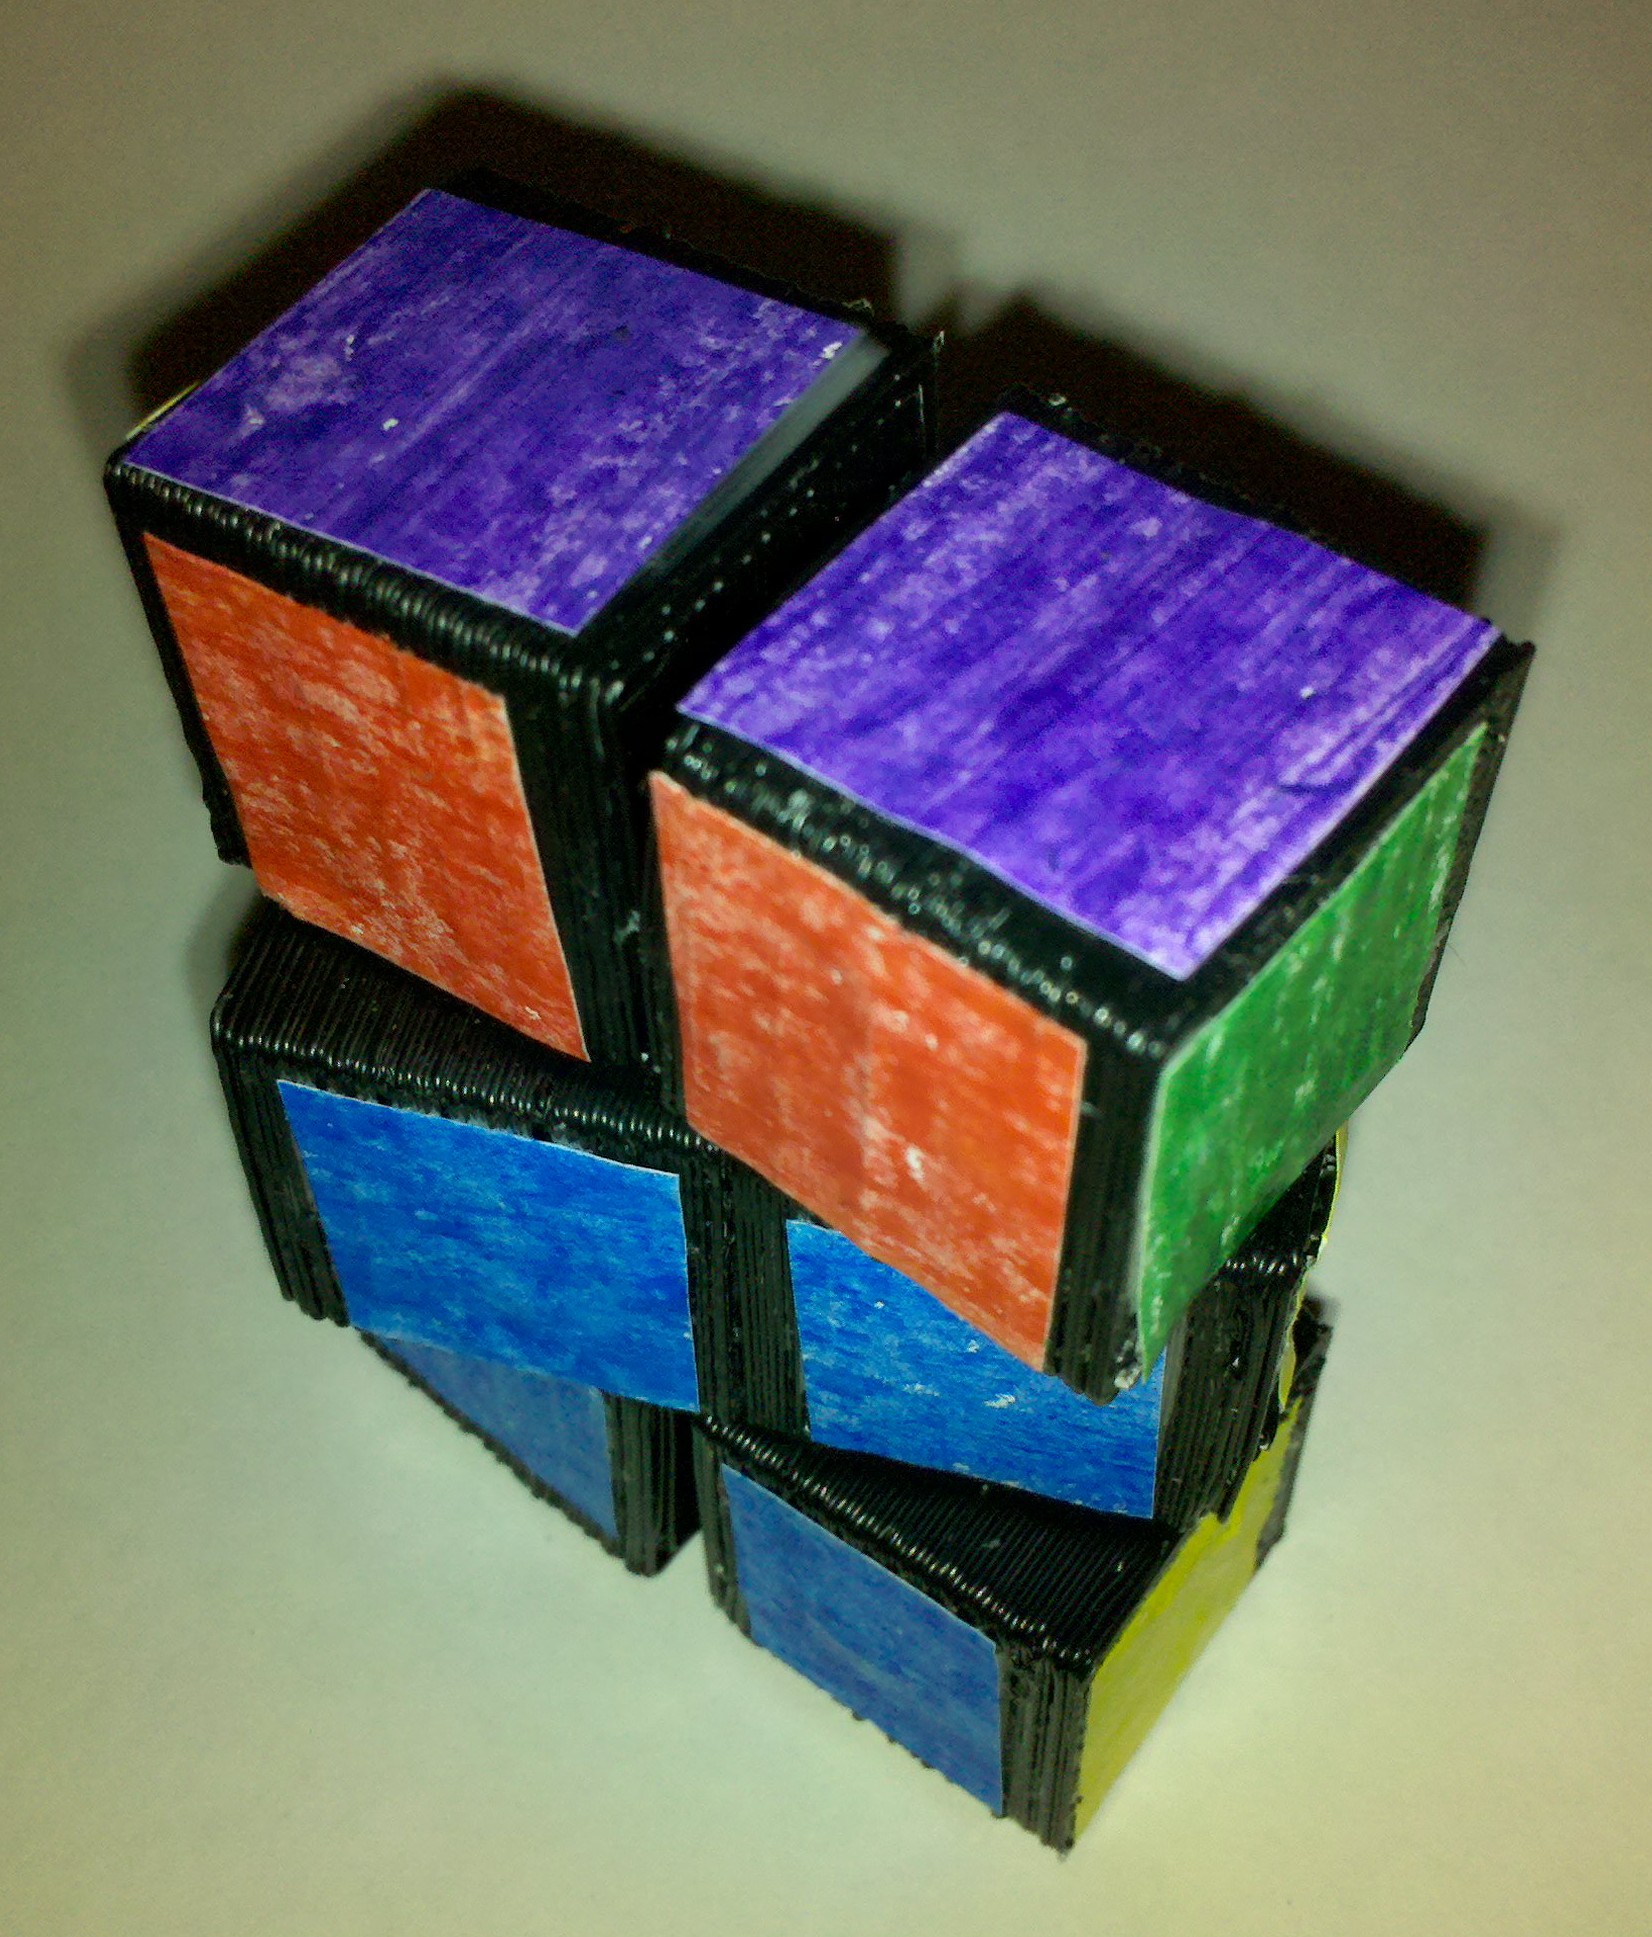 3x2x1 Rubik's Cube